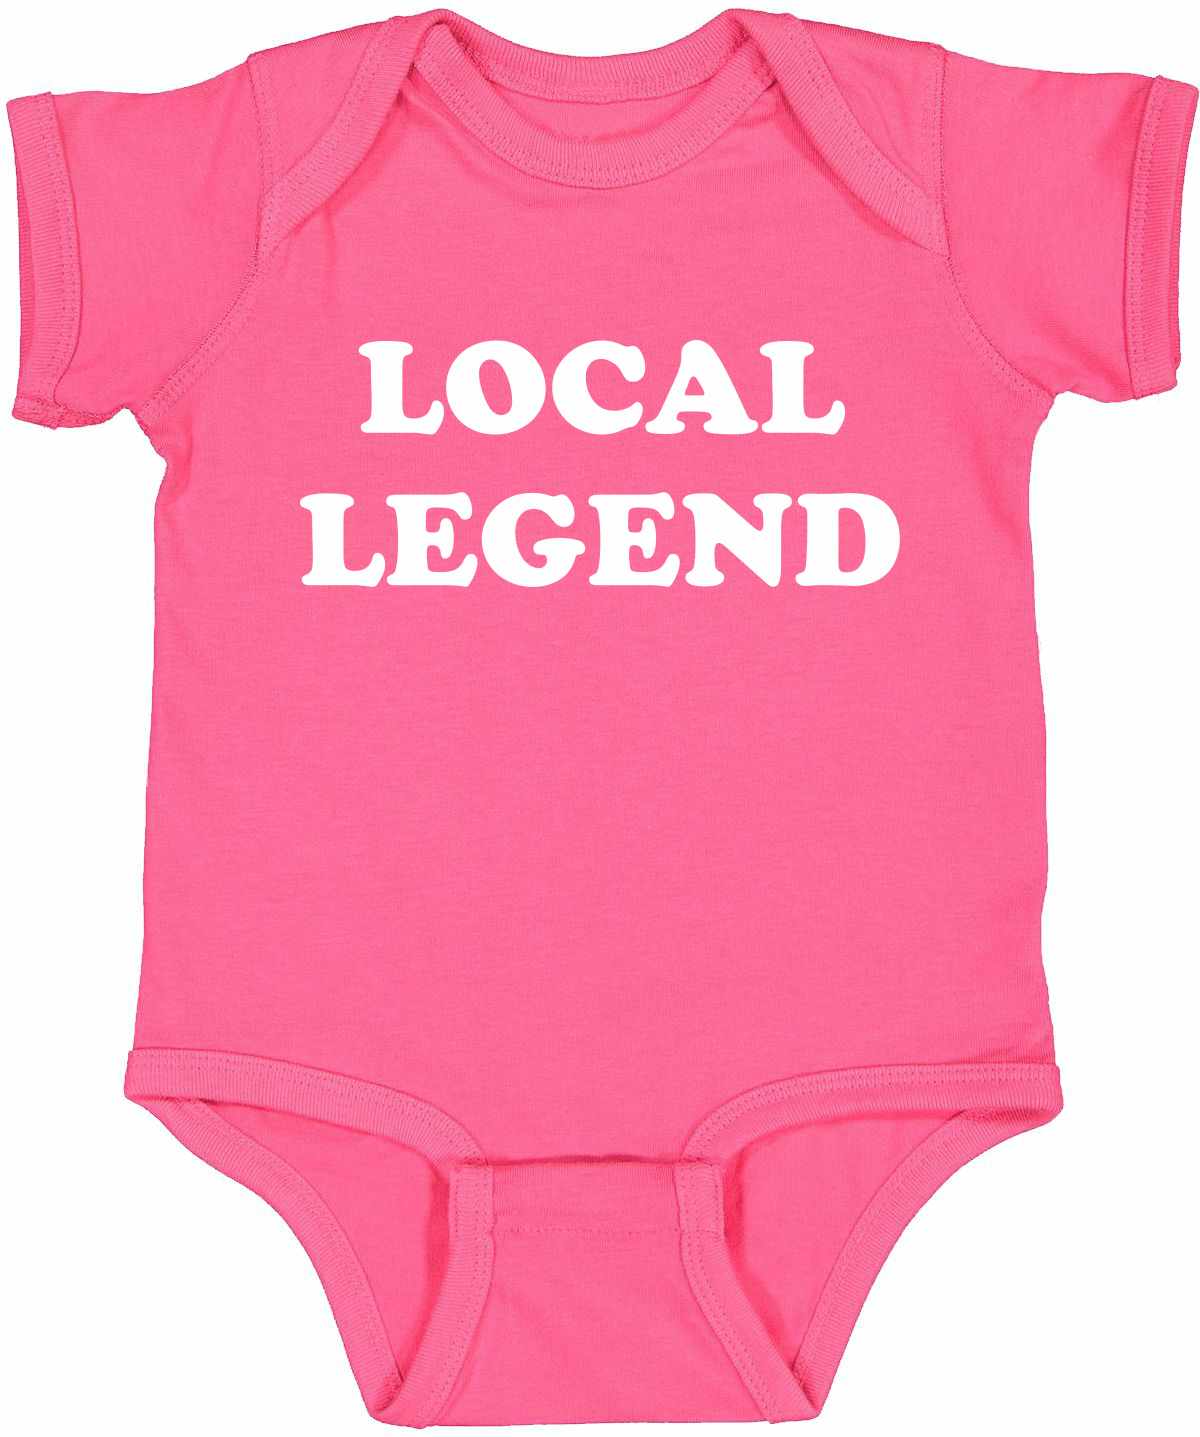 Local Legend on Infant BodySuit (#1196-10)